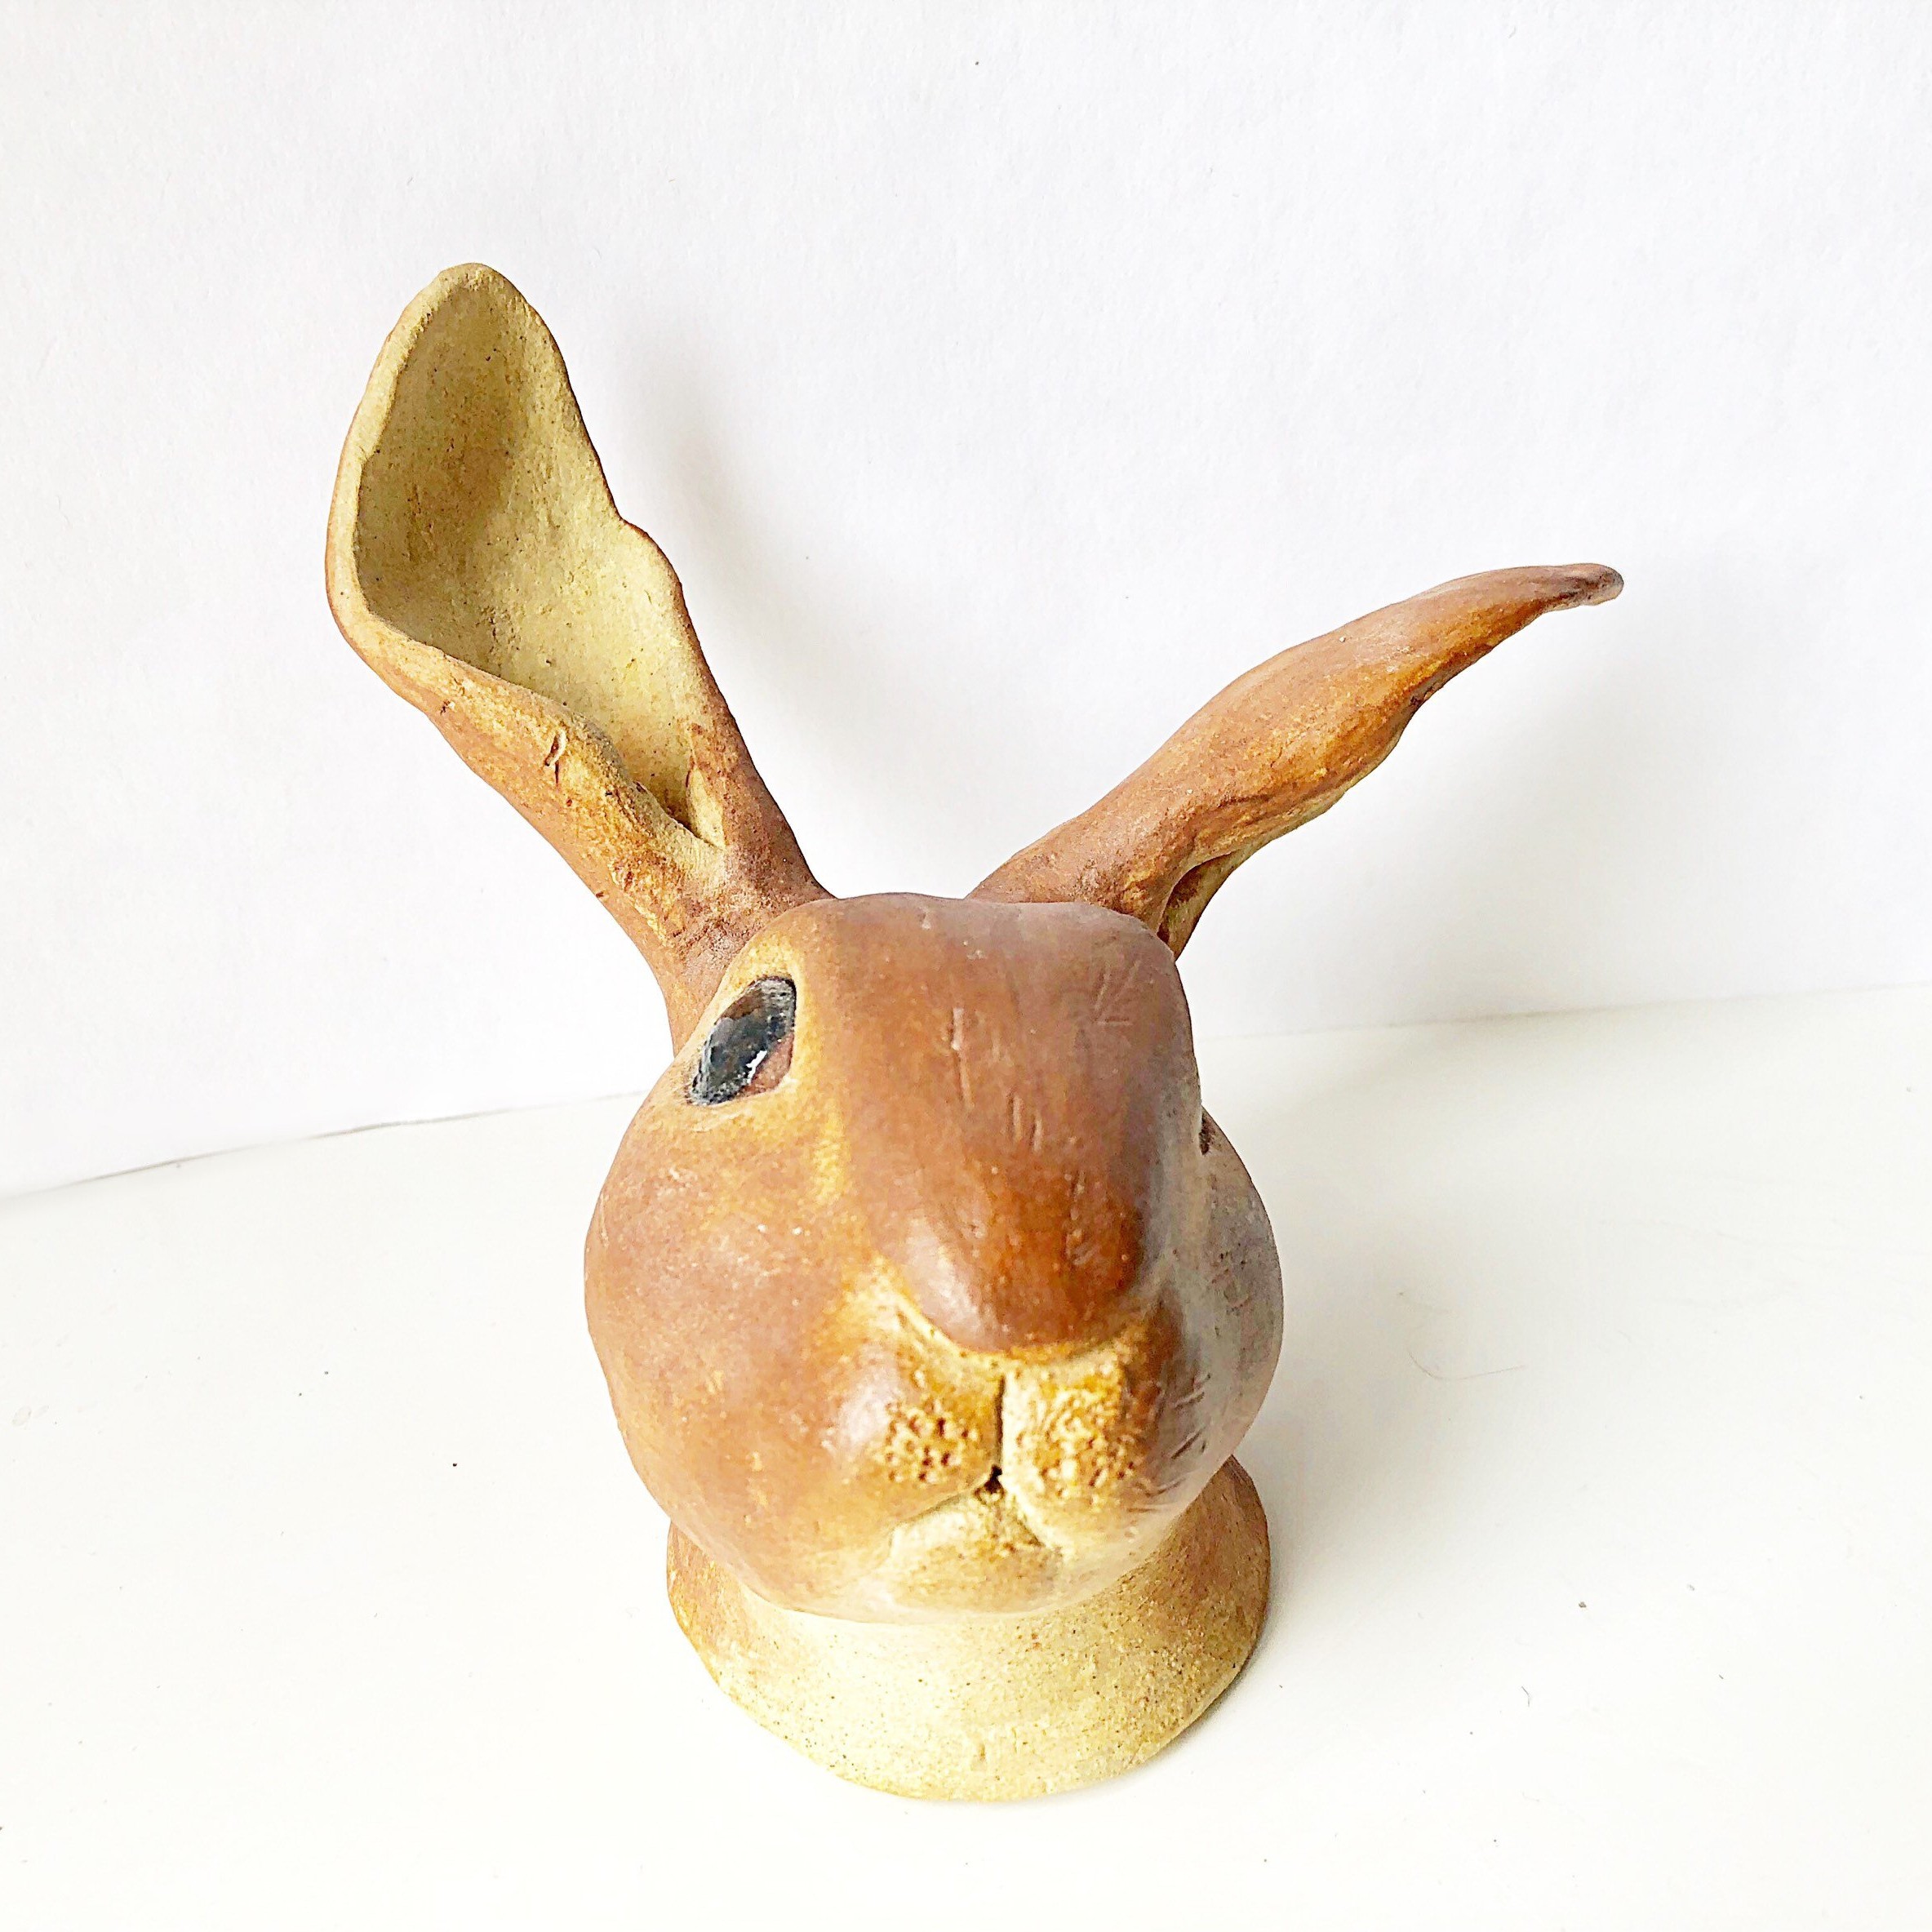 Brown Ceramic Rabbit Head - Bunny Sculpture